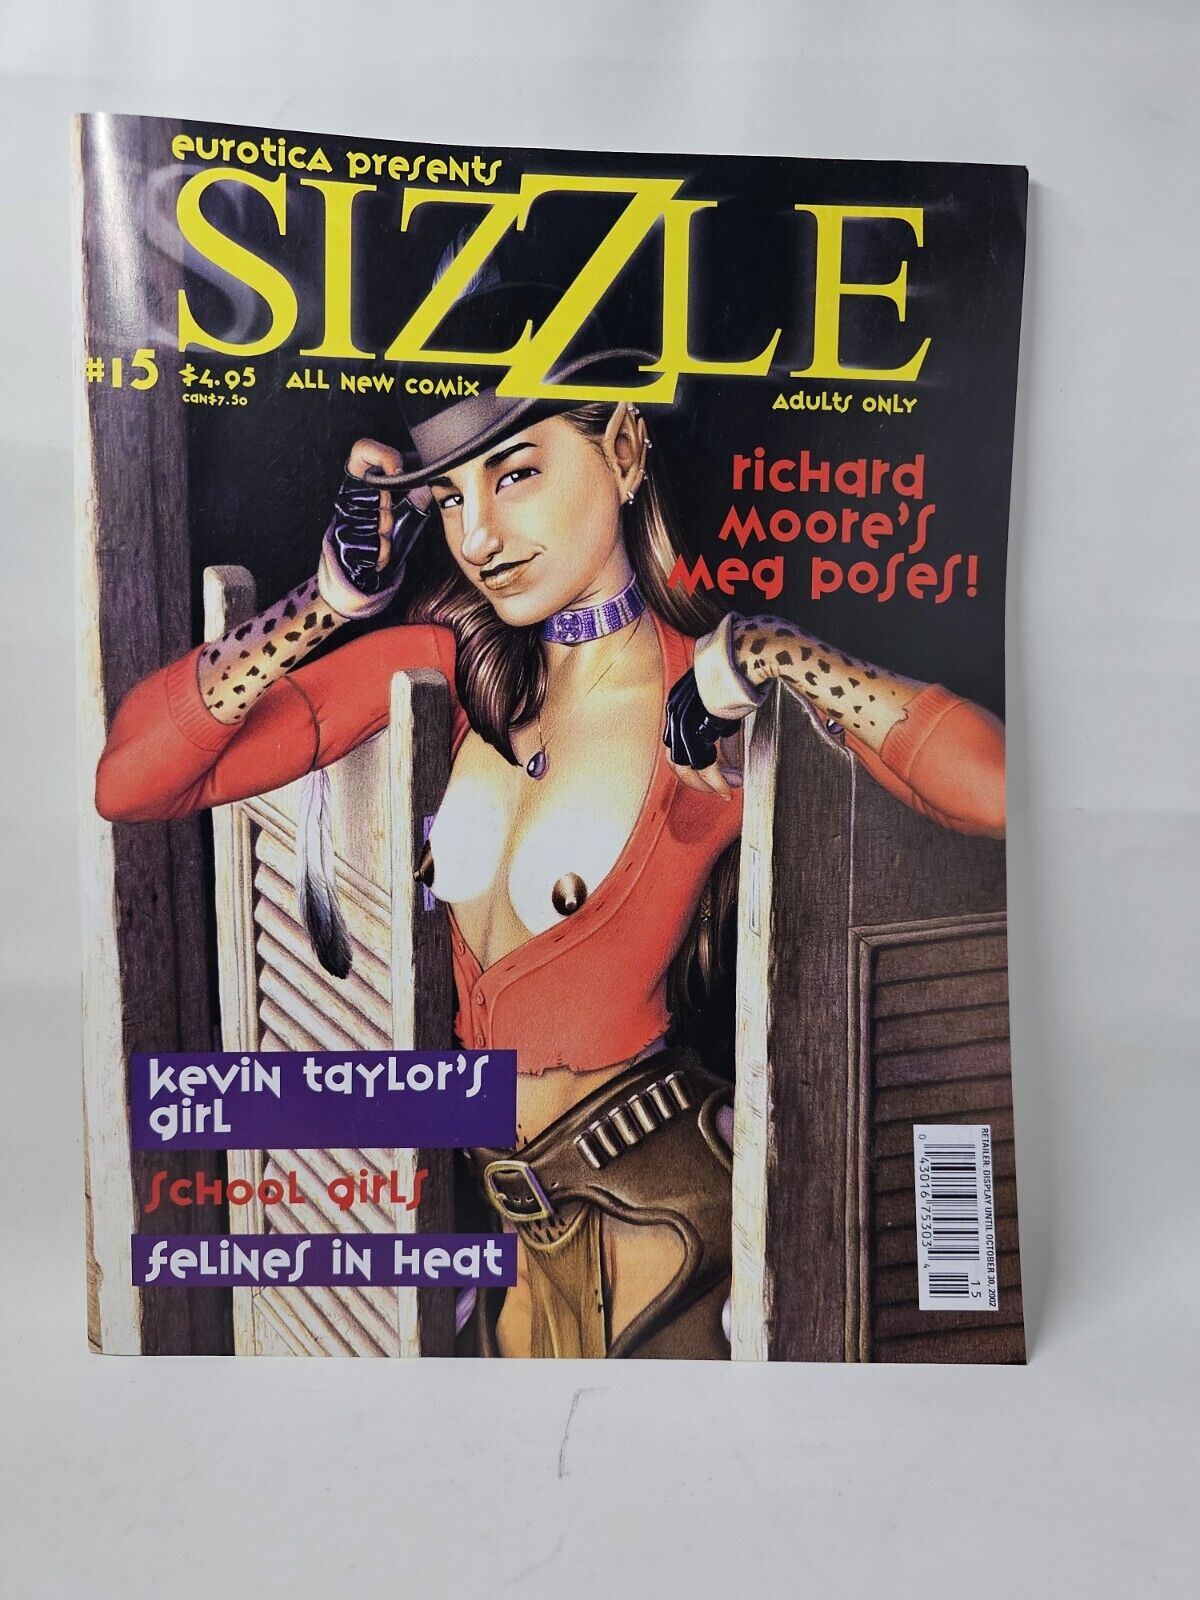 2007 Eurotica Presents SIZZLE Volume #15 Comix NBM Magazine